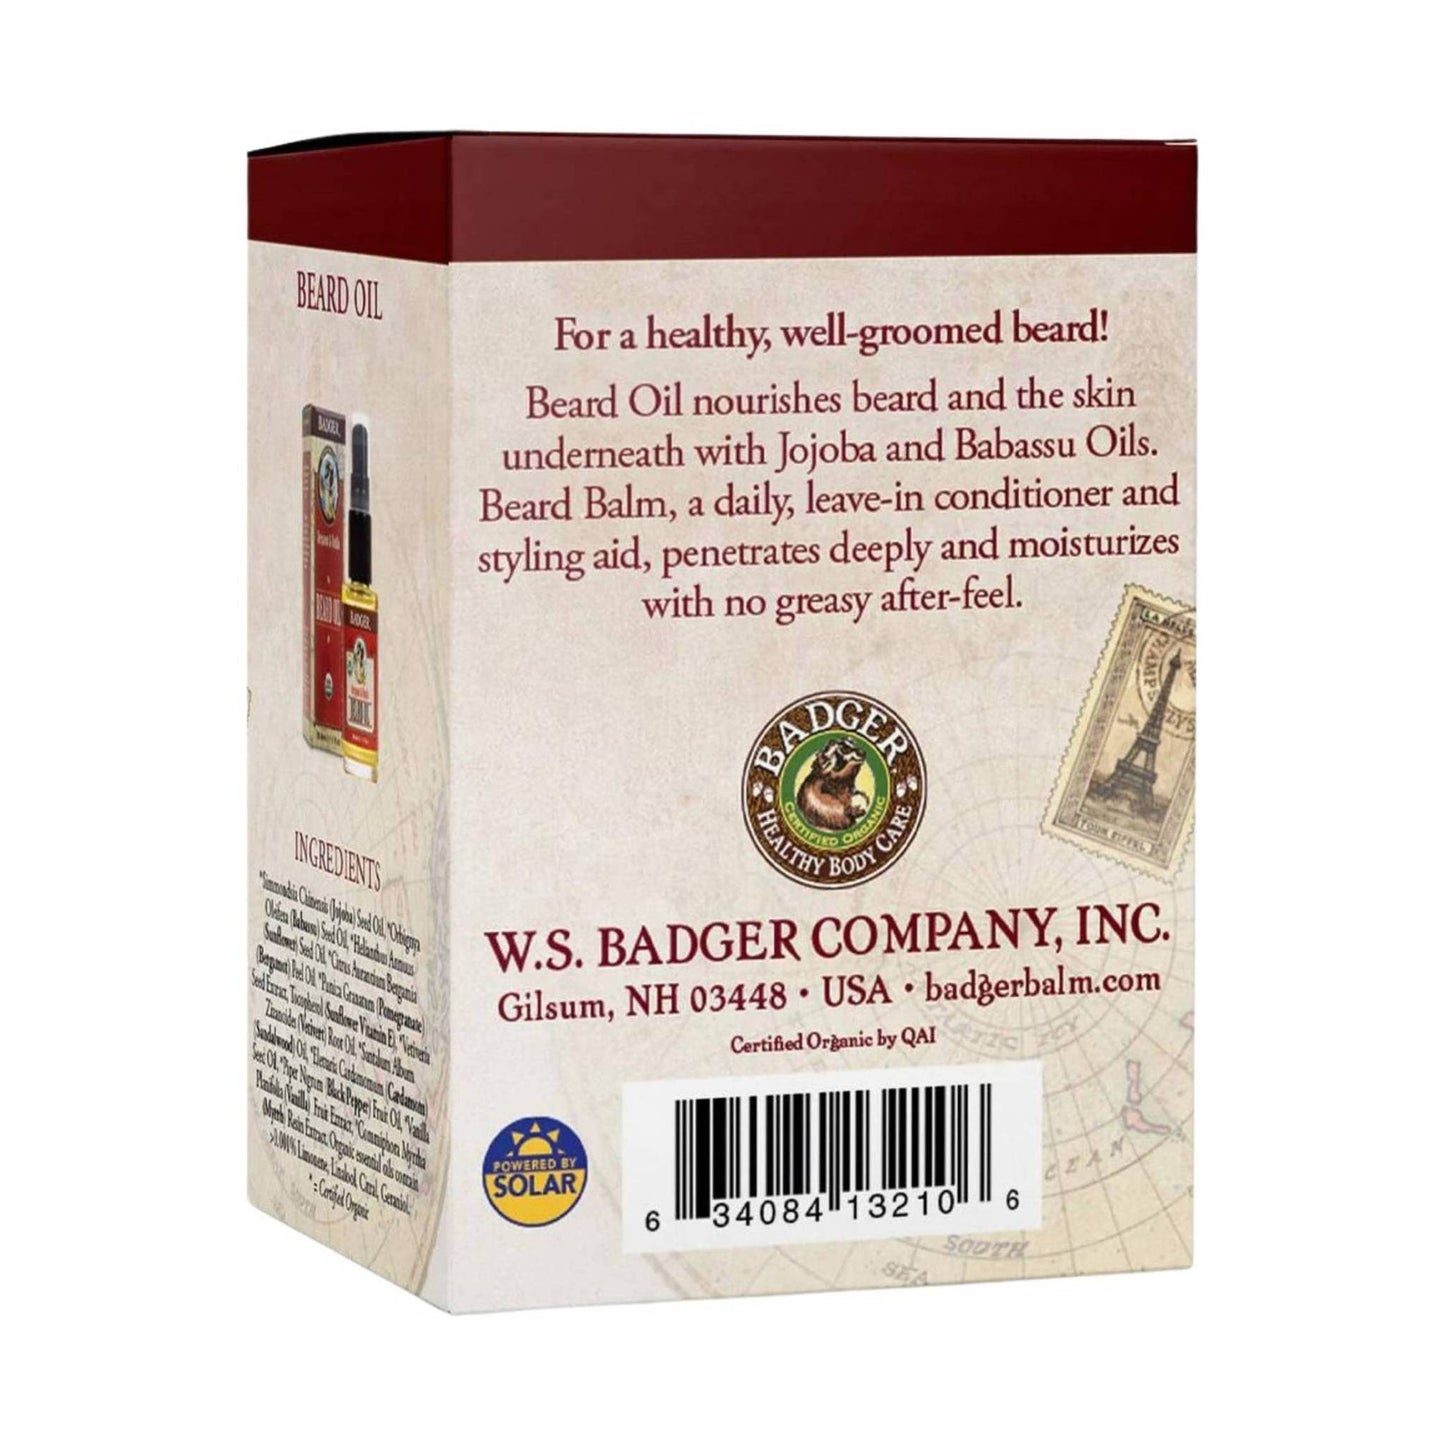 Badger Beard Grooming Kit